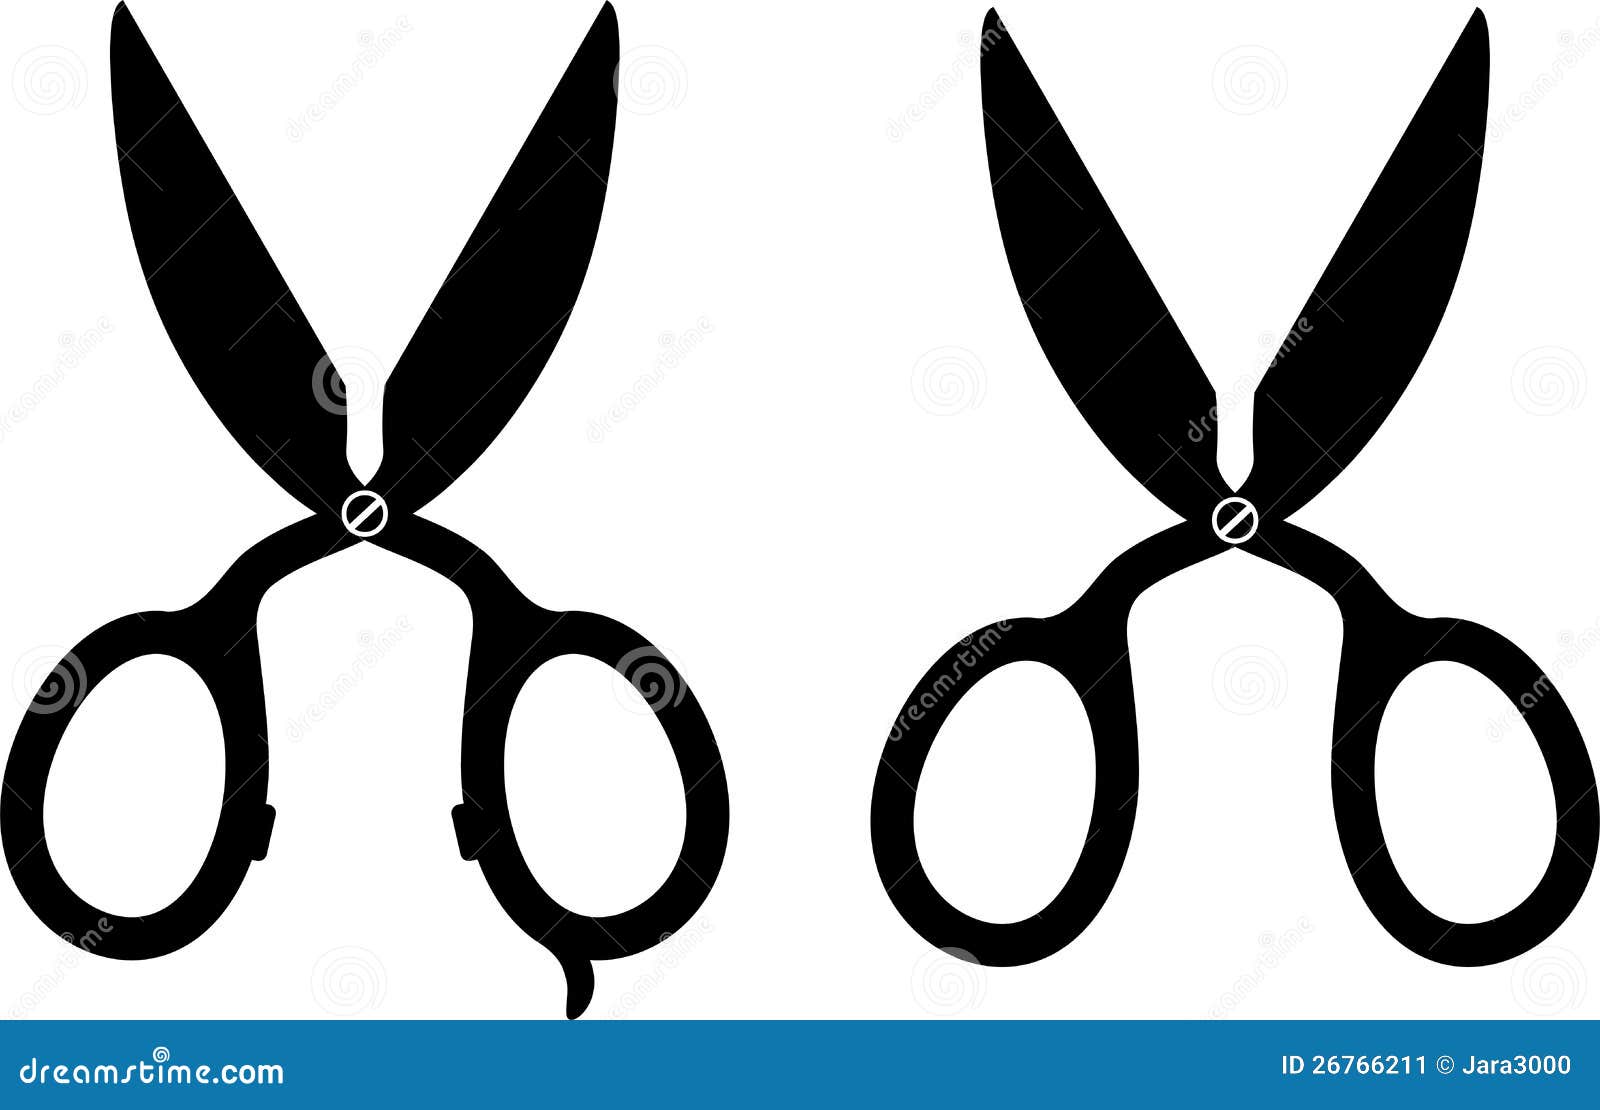 Scissors Silhouette Stock Image - Image: 26766211